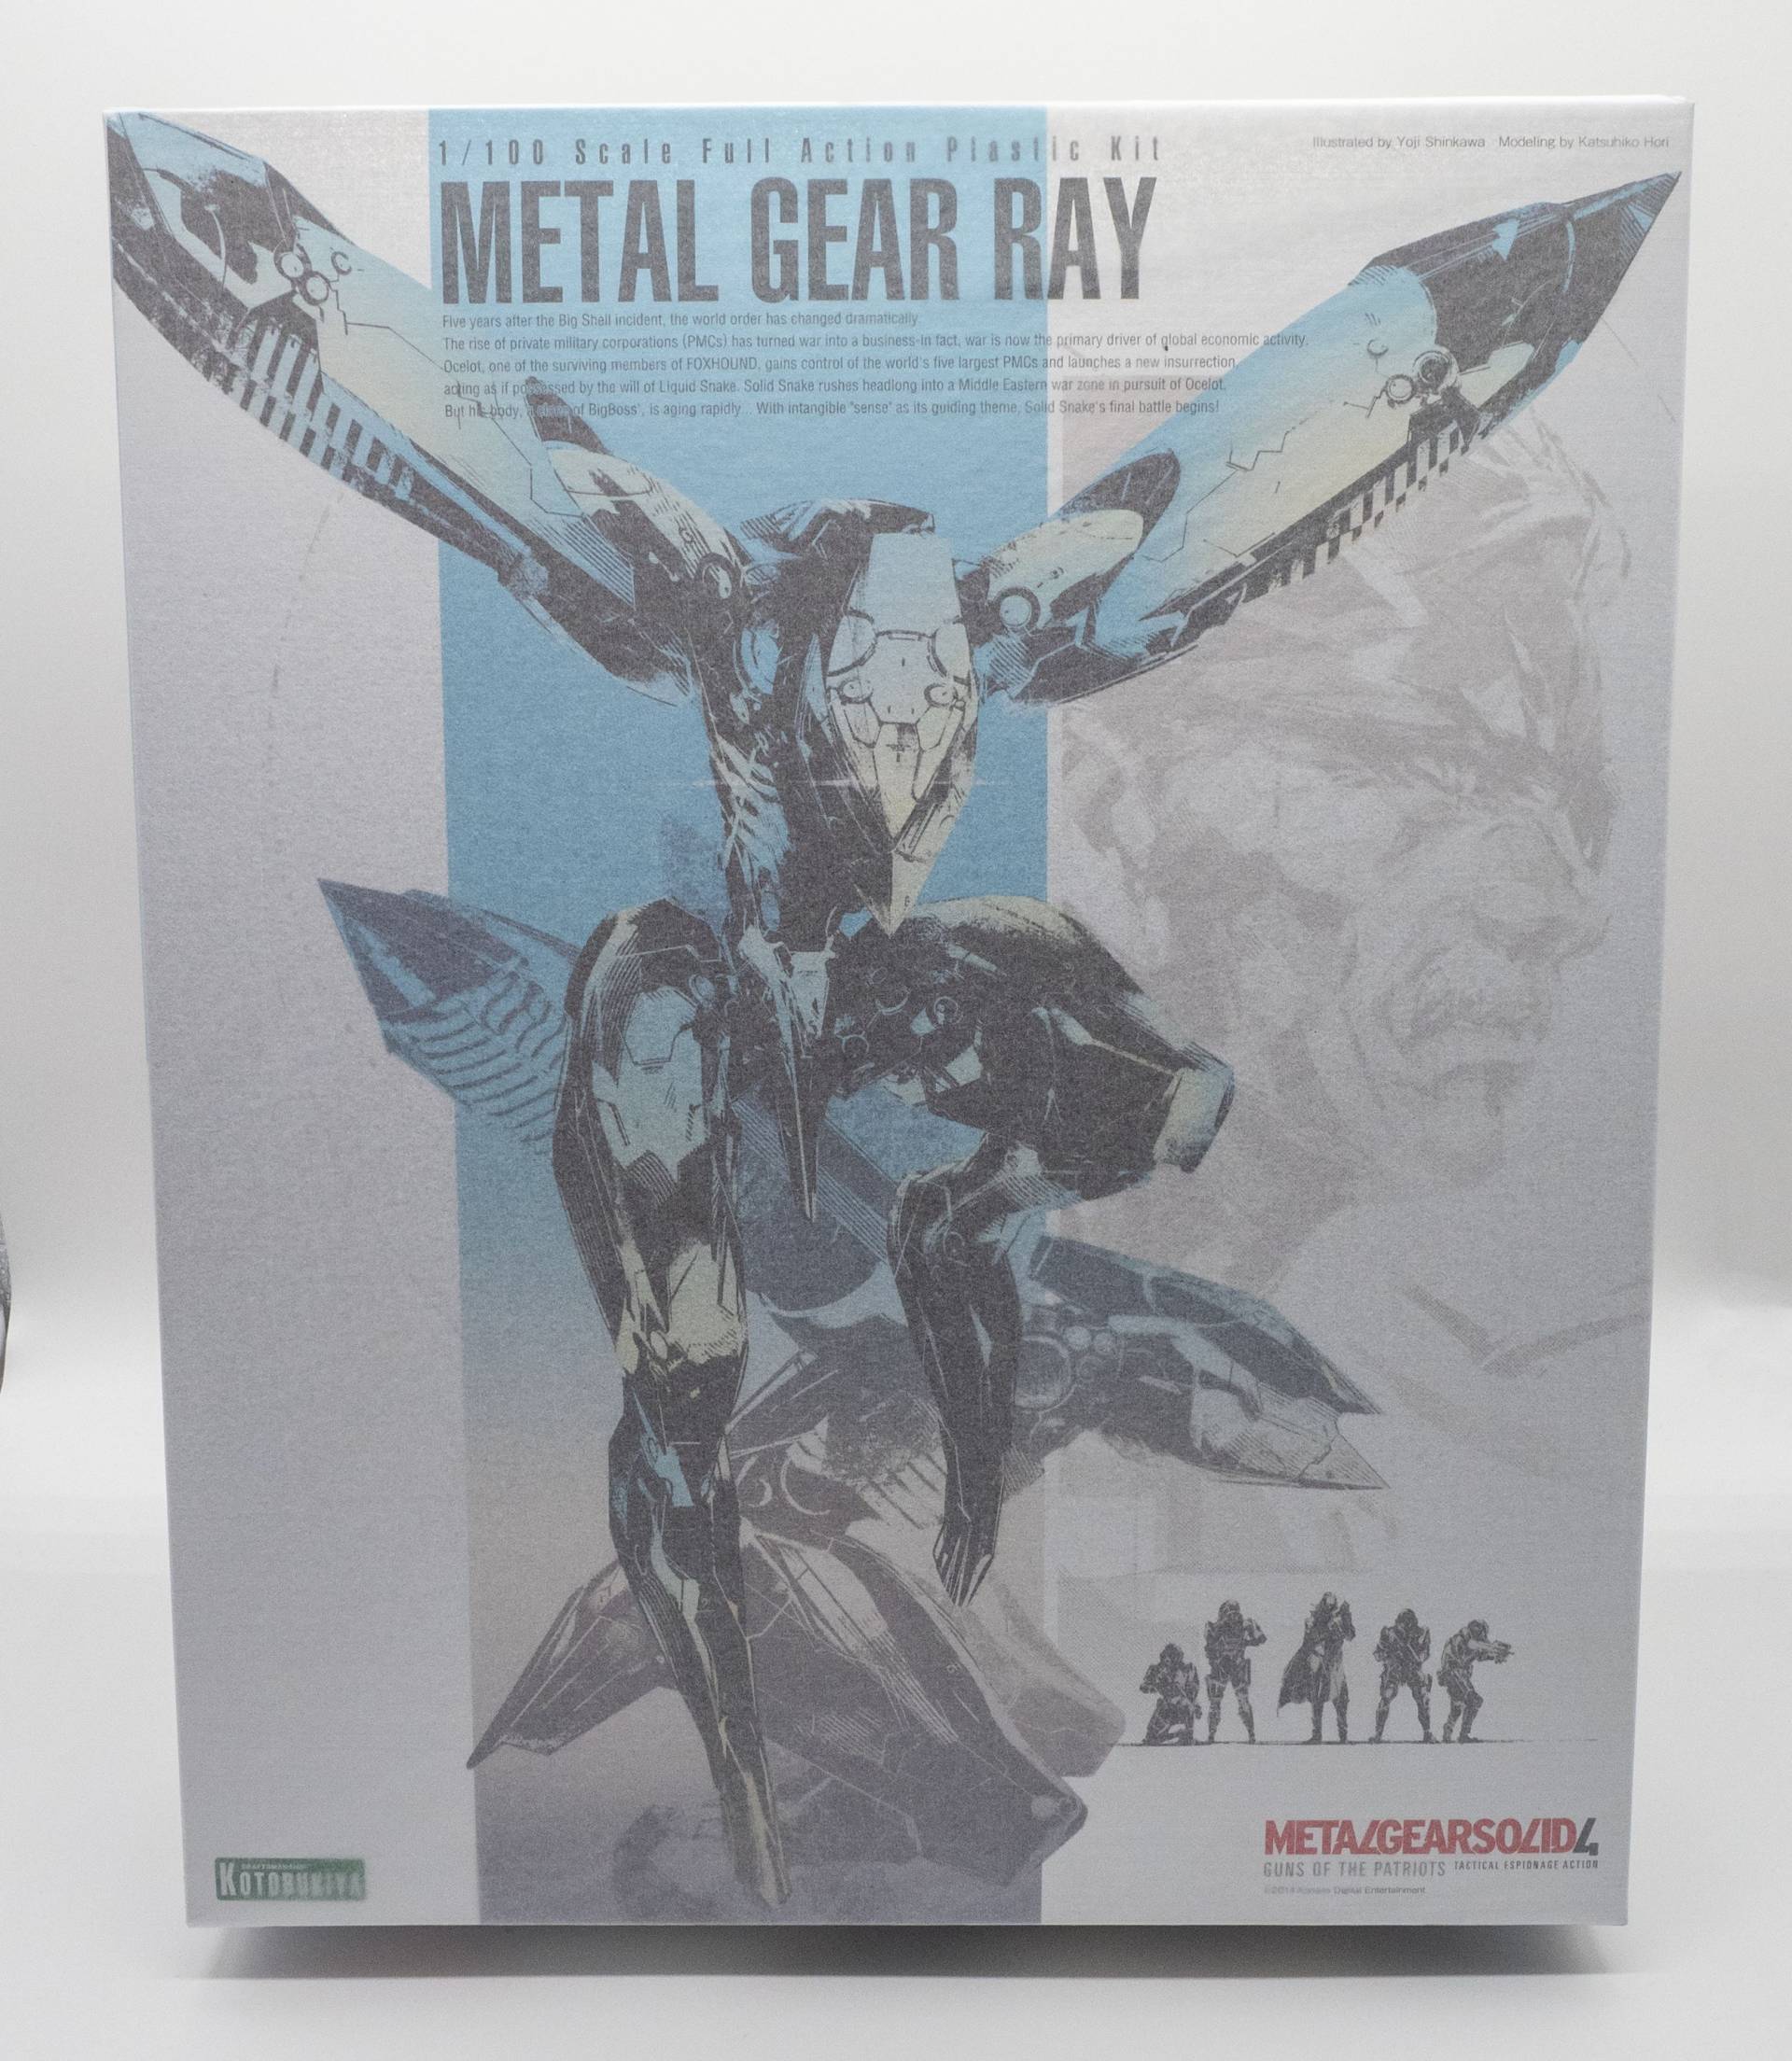 Metal Gear Solid 4 Figur Plastic Model Kit 1/100 Metal Gear Ray von Kotobukiya